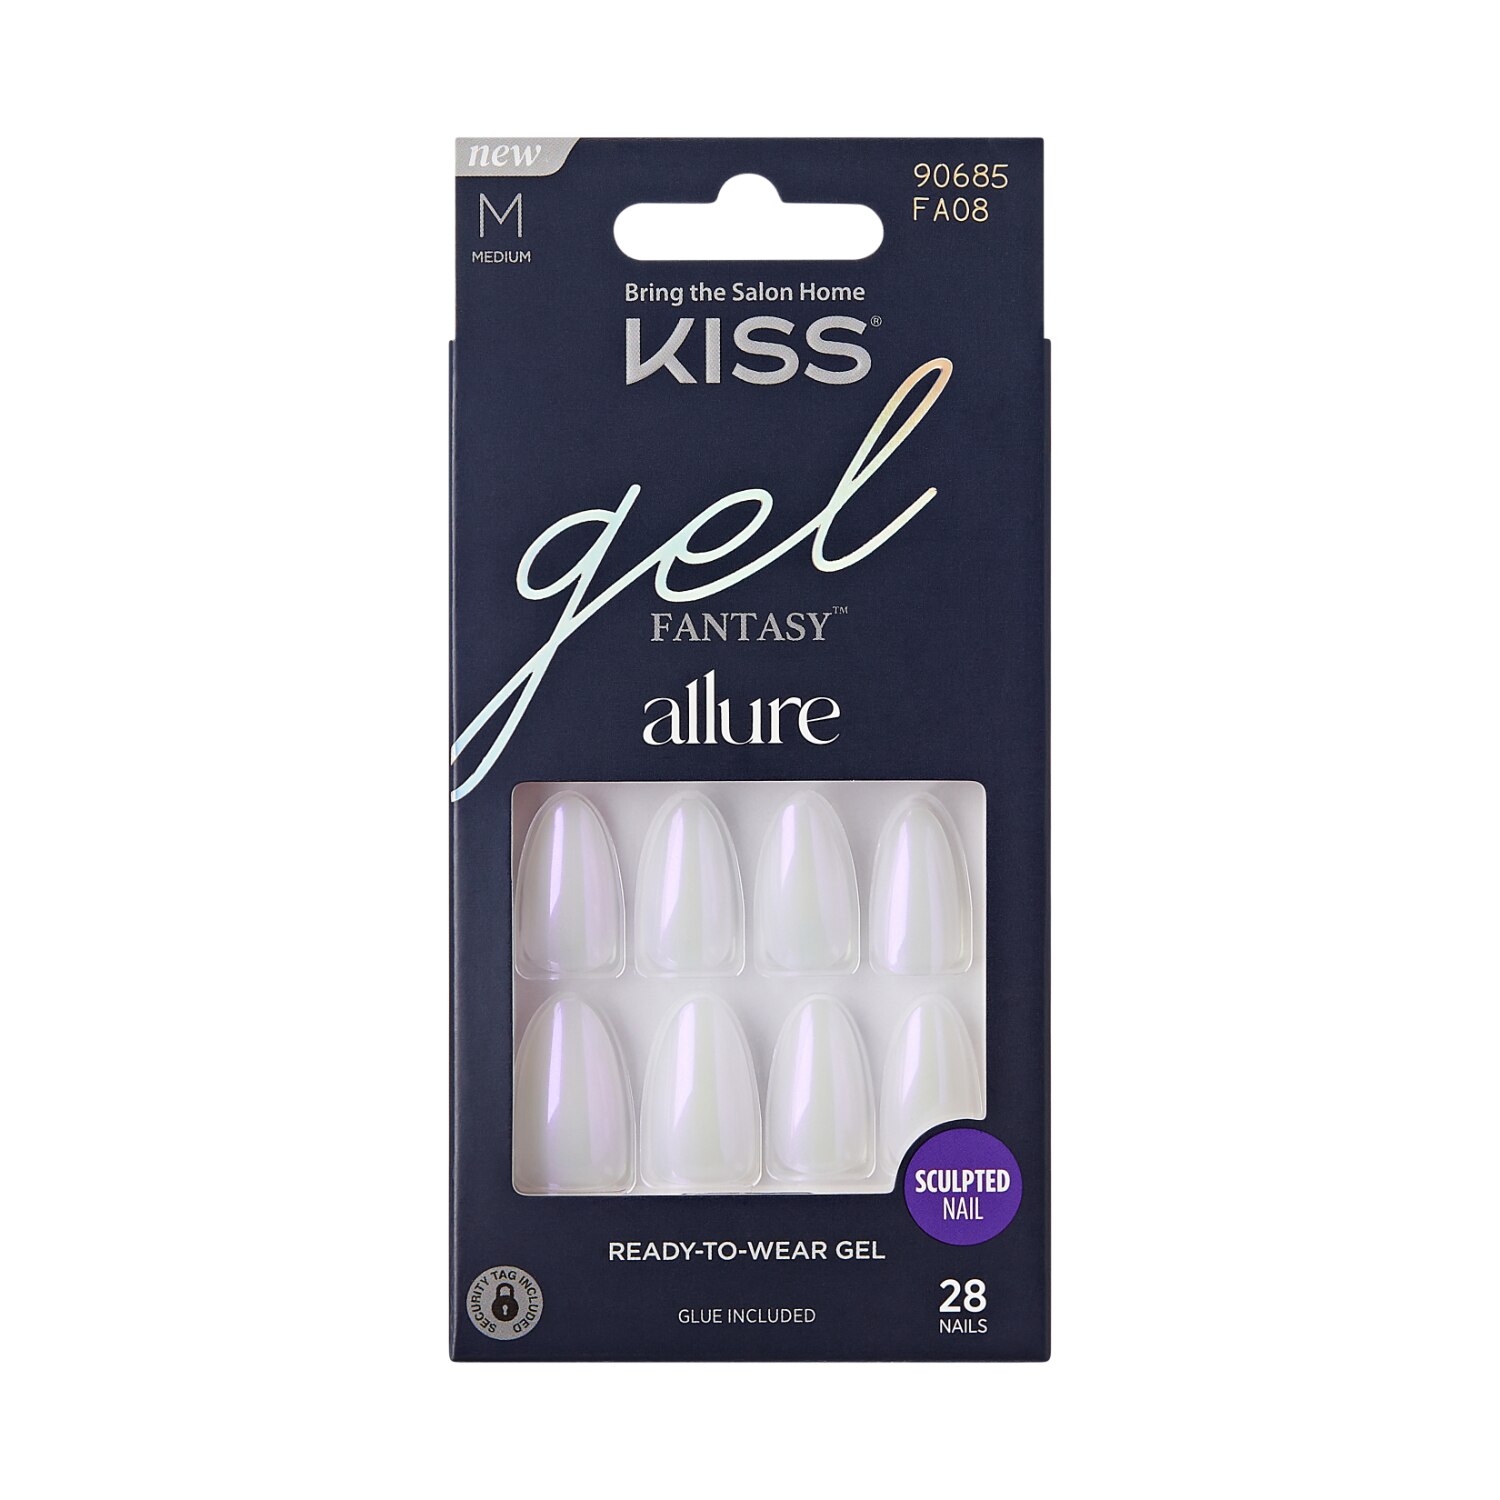 KISS Gel Fantasy Allure Press-On Nails, White, Medium, Almond Shape, 31 Ct. , CVS